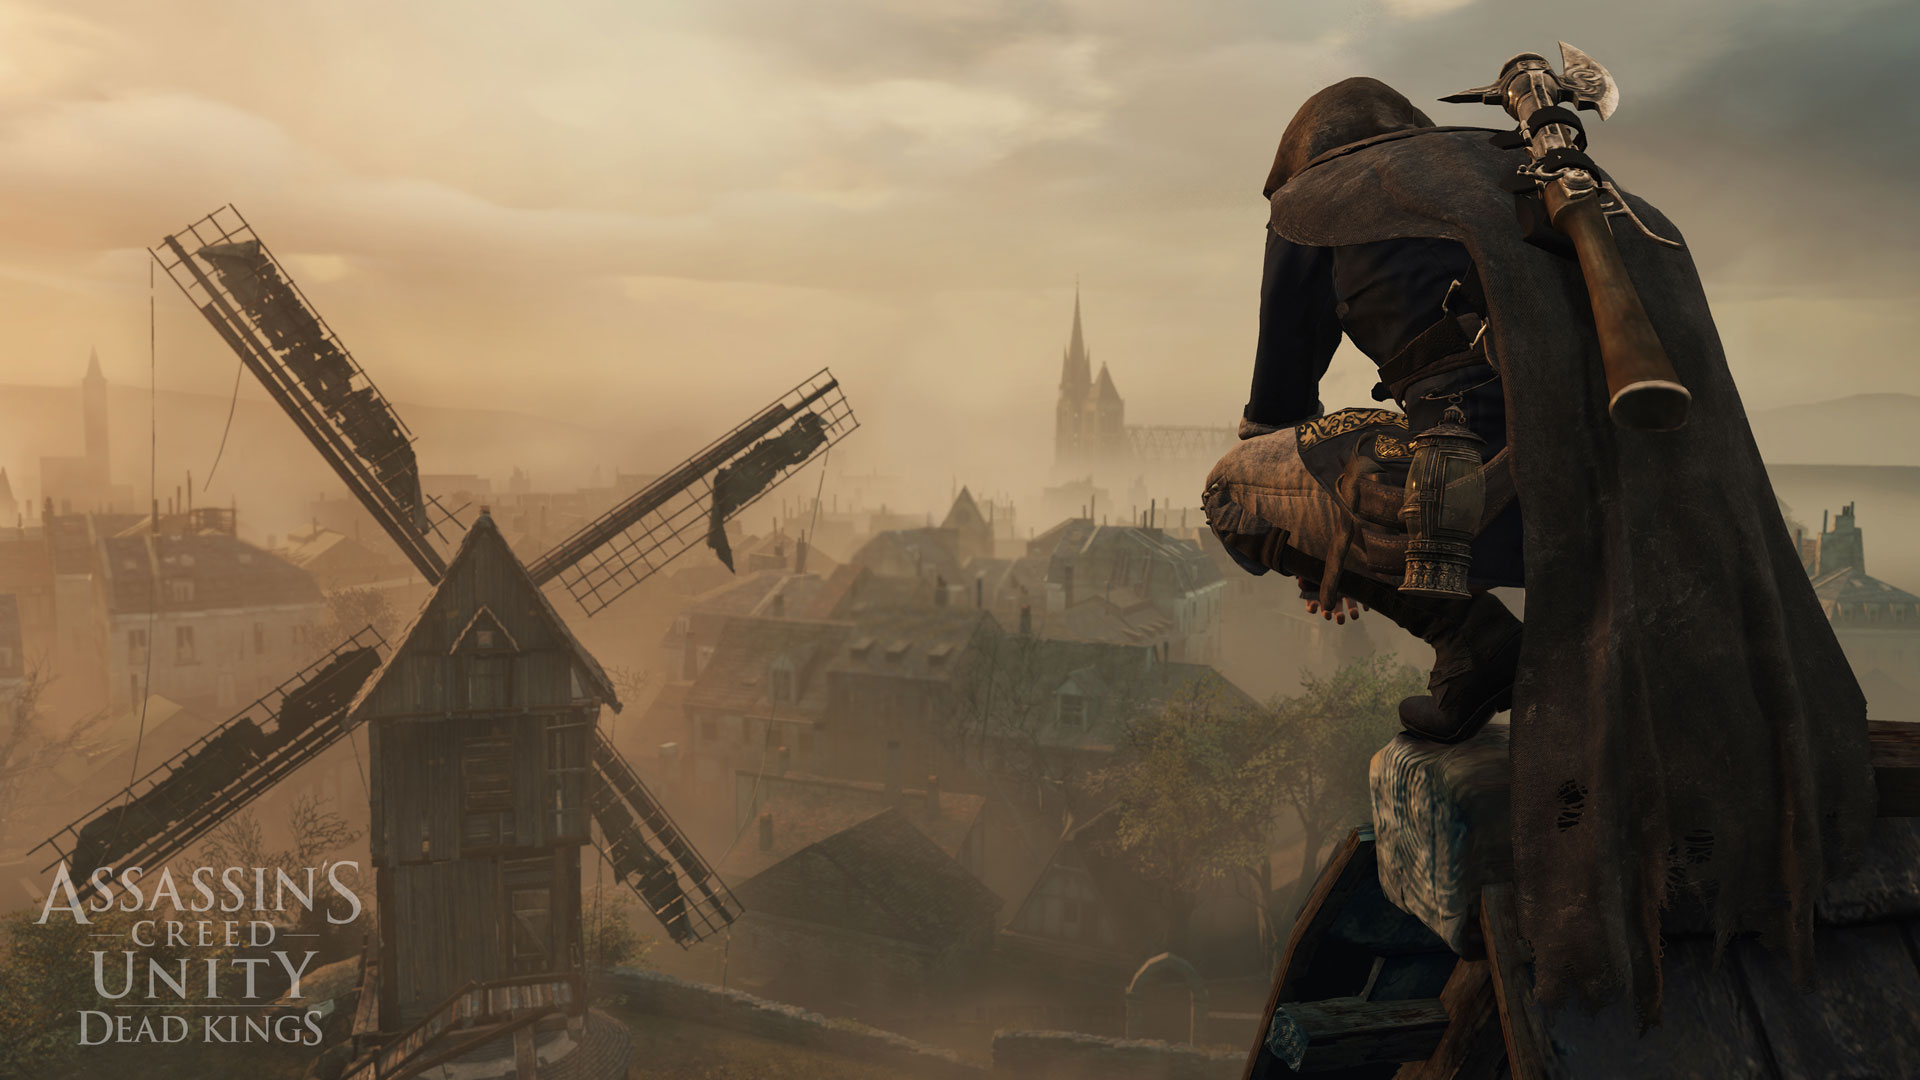 Assassin's Creed Unity - Dead Kings screenshot 2239